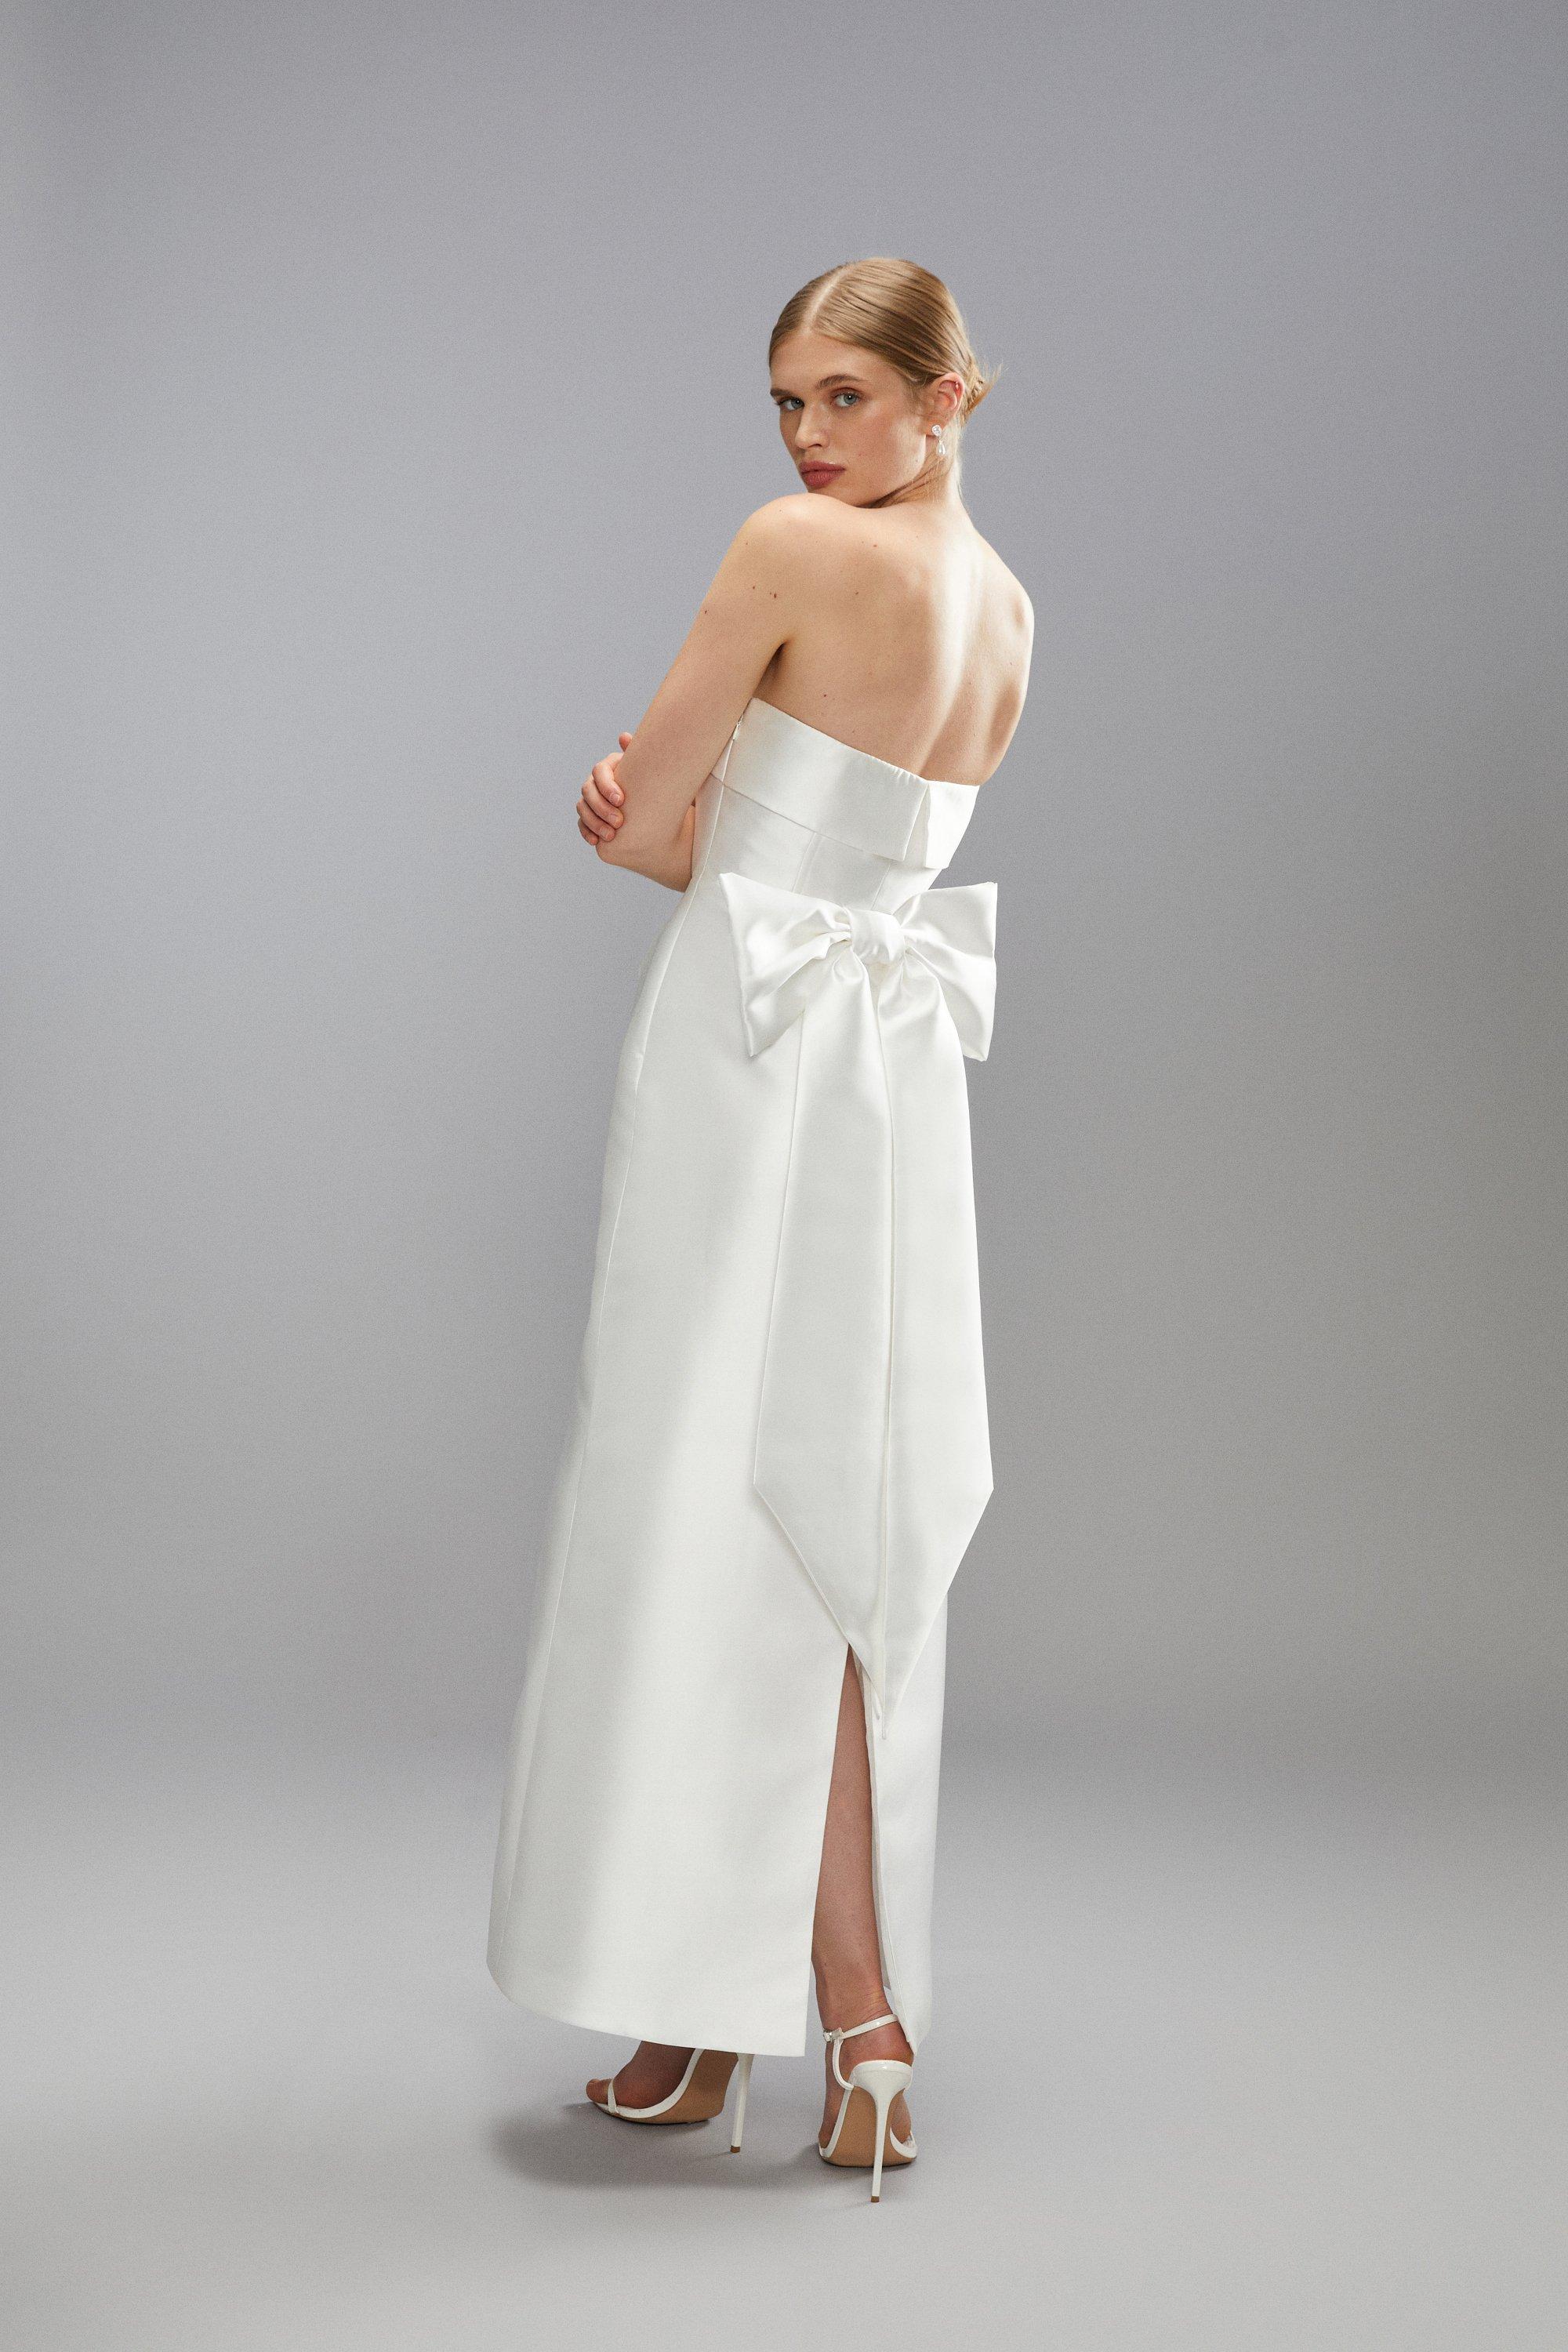 Statement Bow Back Bardot Wedding Dress - Ivory